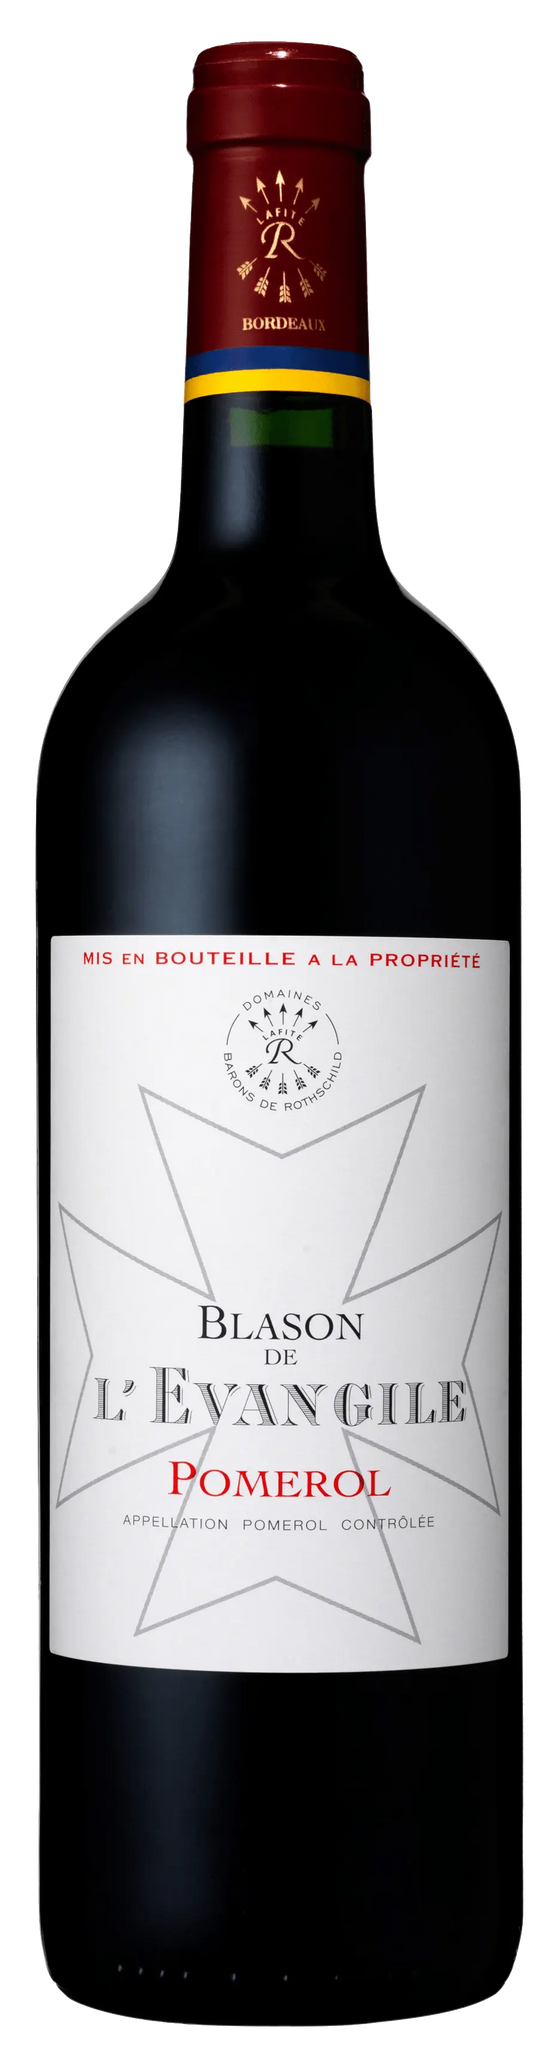 Blason de l'Evangile 2012, Pomerol (2nd wine of Chateau L'Evangile) (1x75cl) - TwoMoreGlasses.com